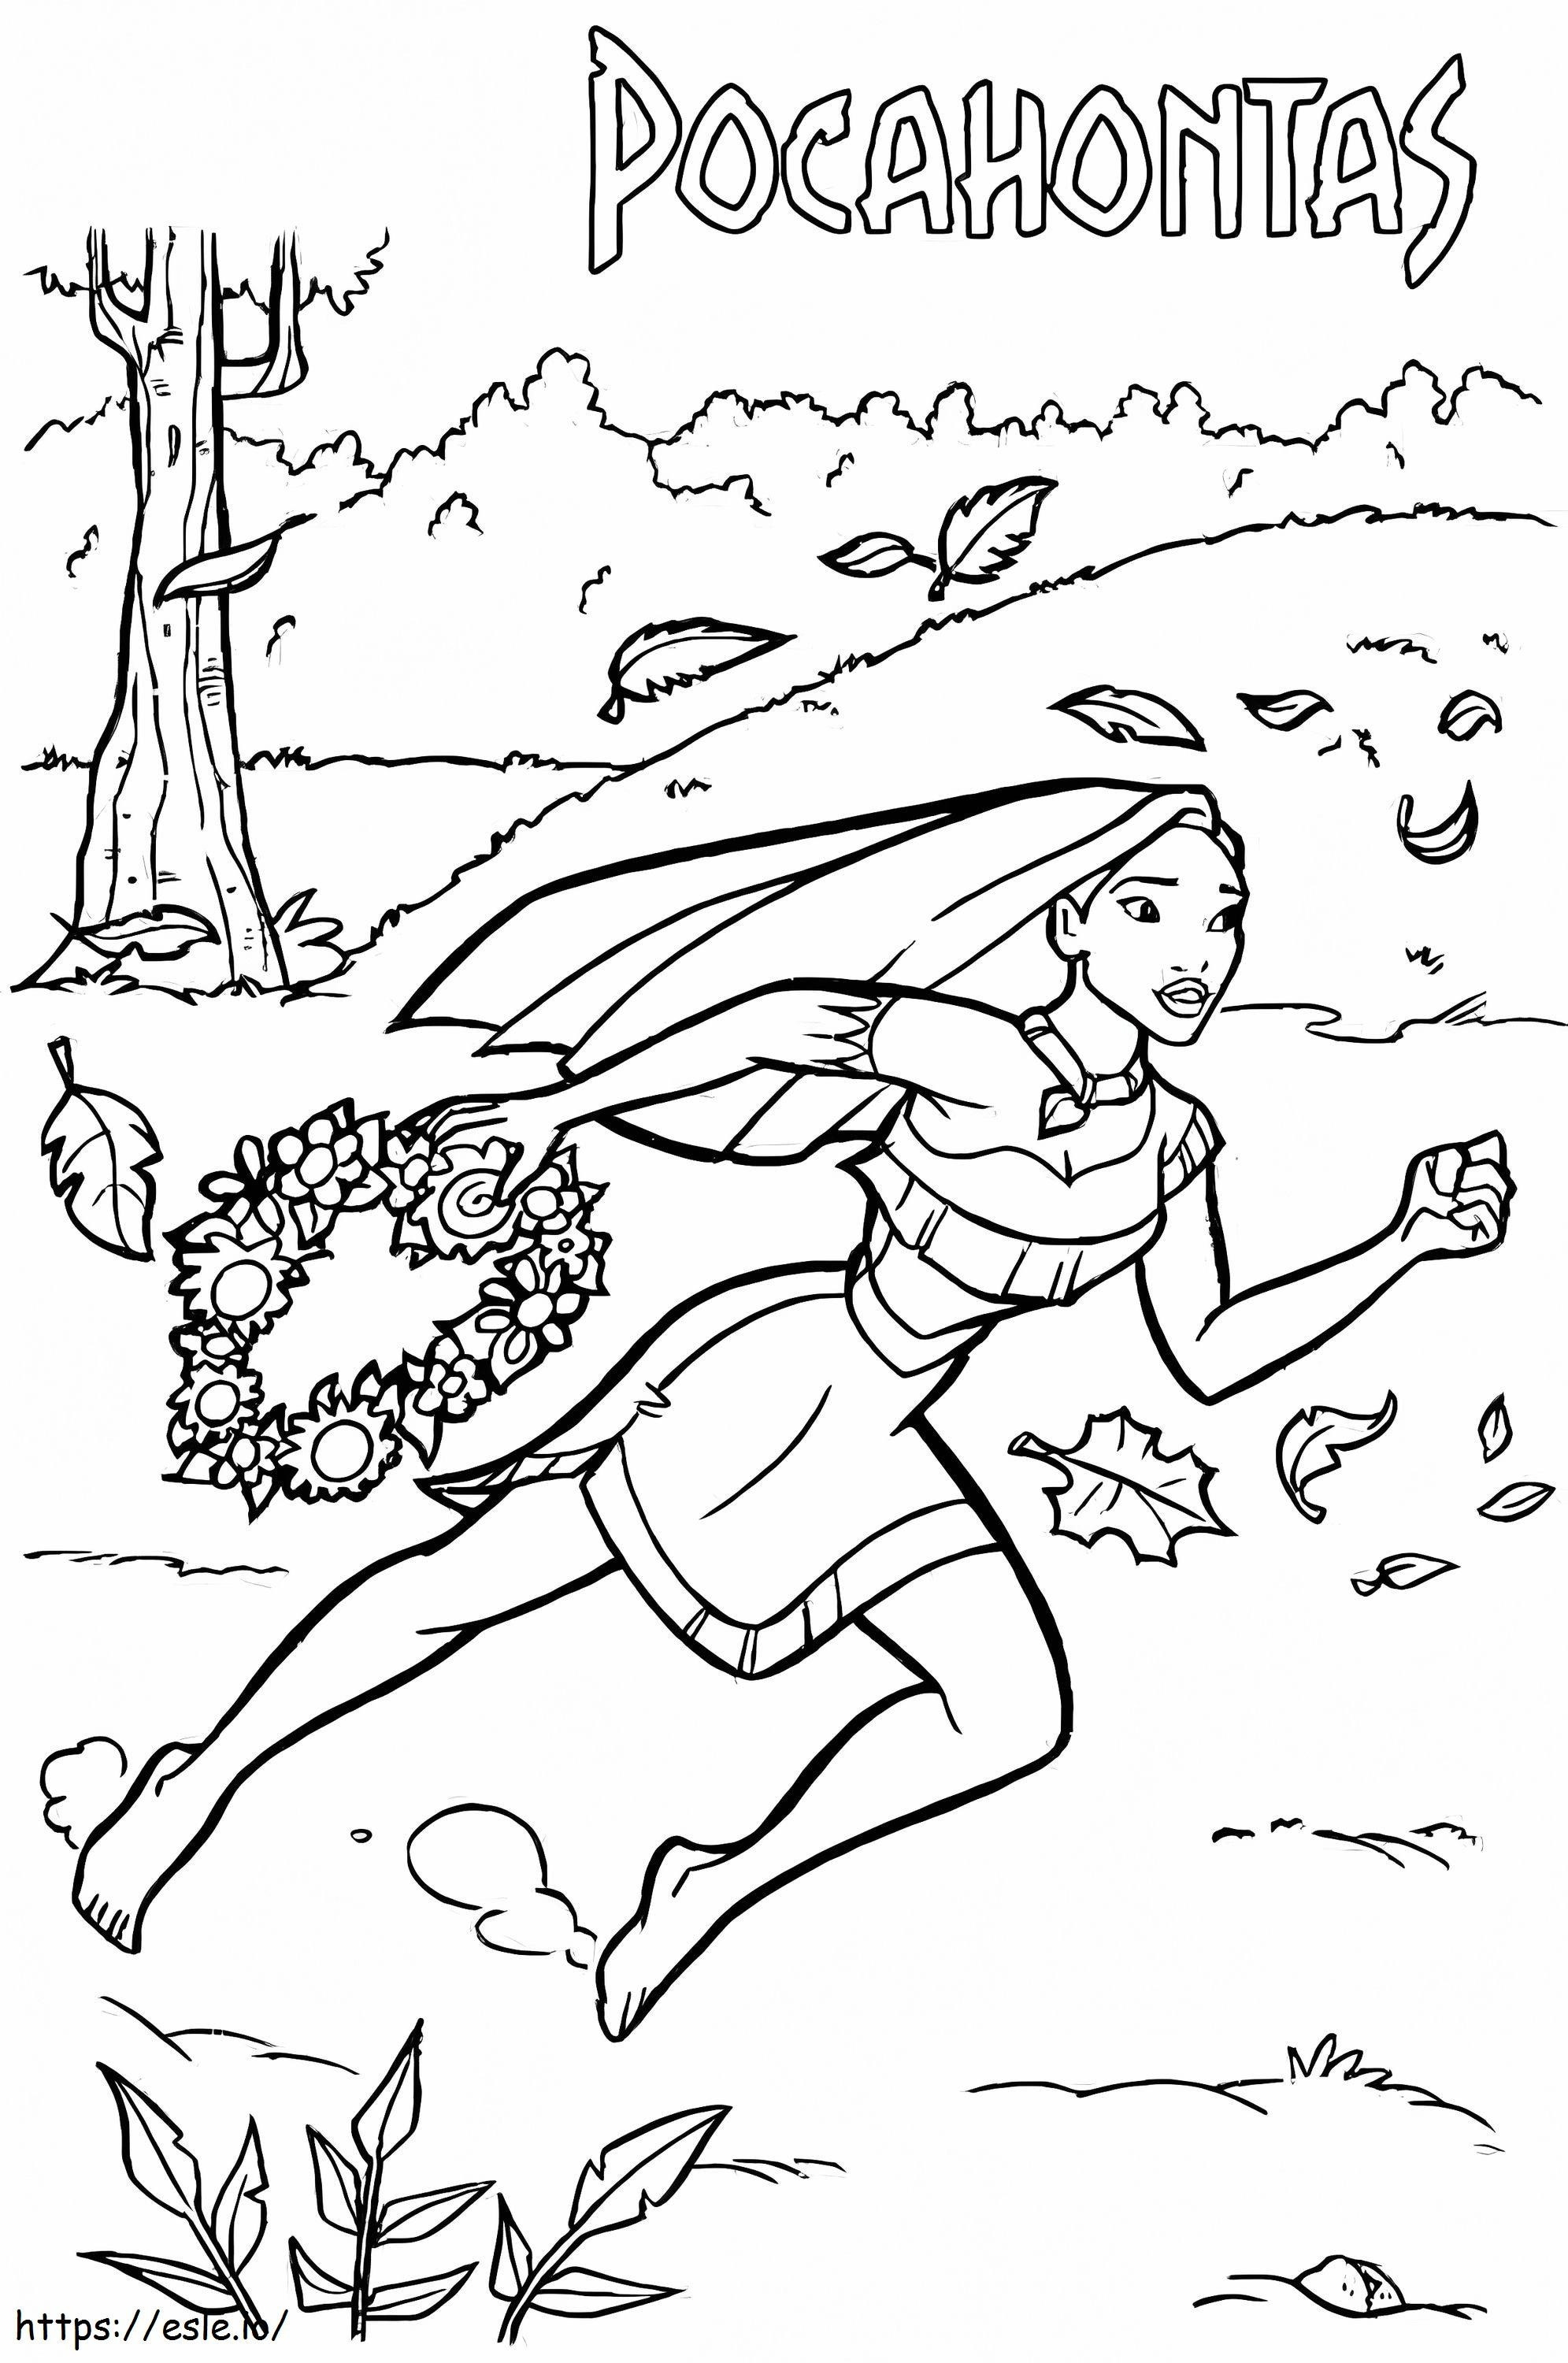 Pocahontas biegnie kolorowanka